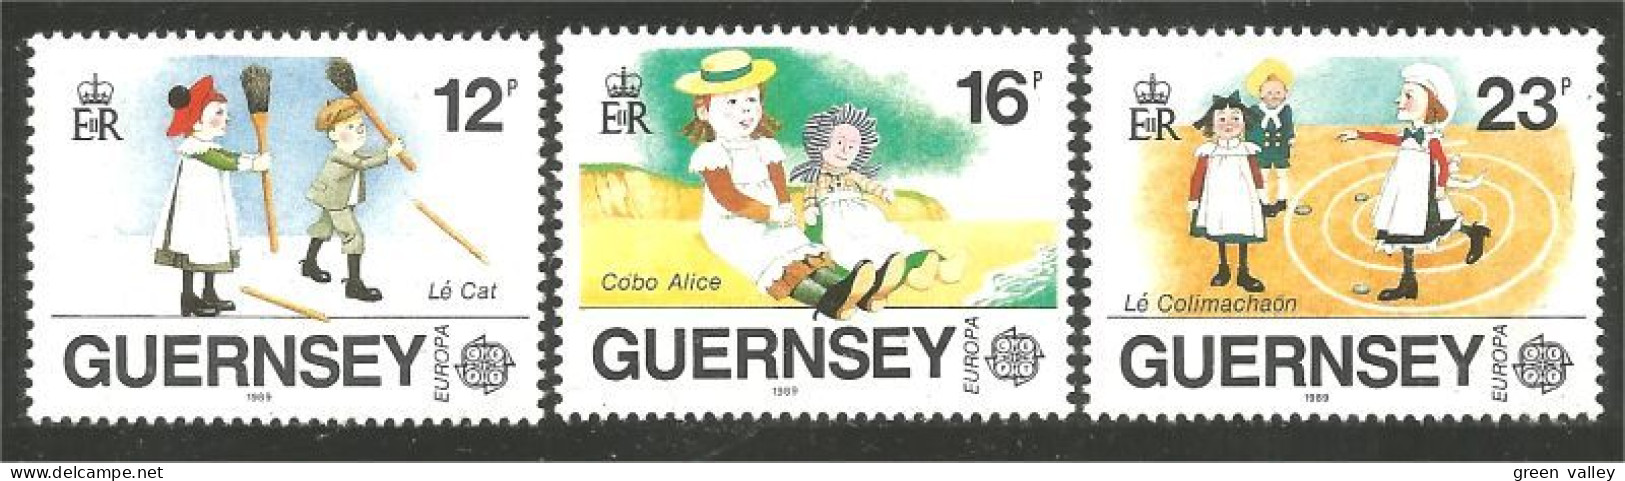 EU89-4 EUROPA-CEPT 1989 Guernsey Jeux Enfants Children Games Kinderspiele MNH ** Neuf SC - 1989